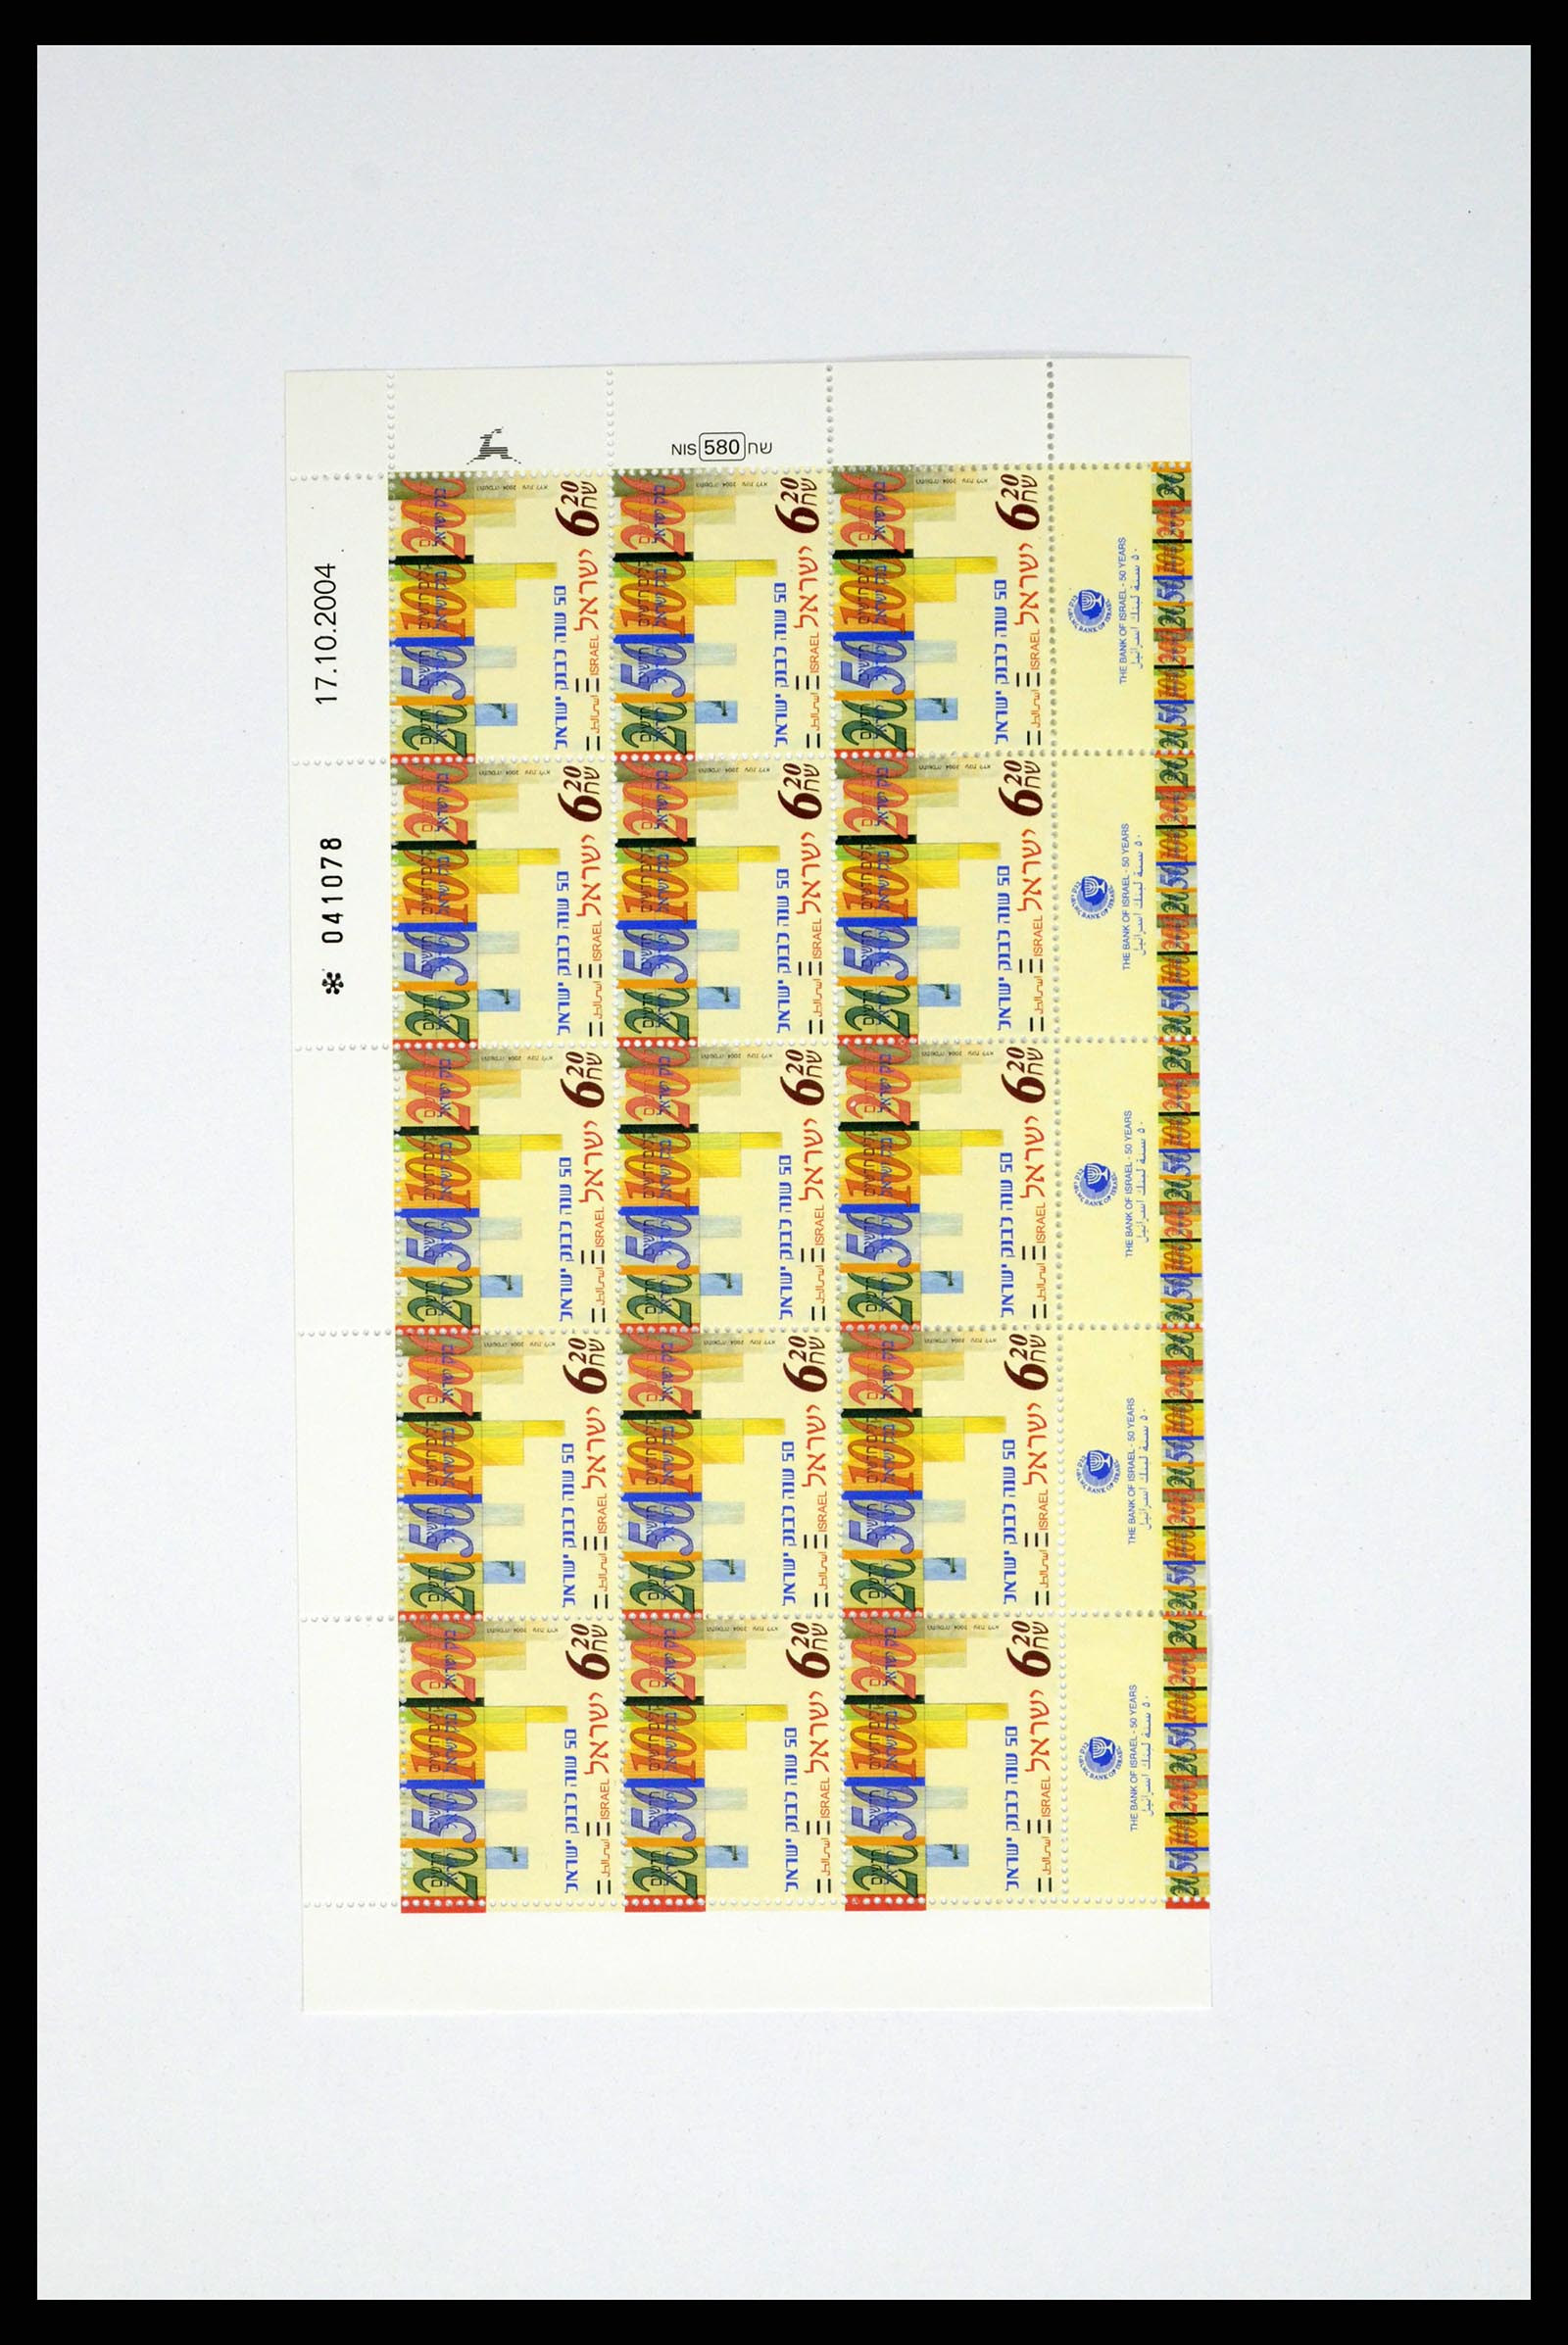 37779 350 - Stamp collection 37779 Israel sheetlets 1986-2009.